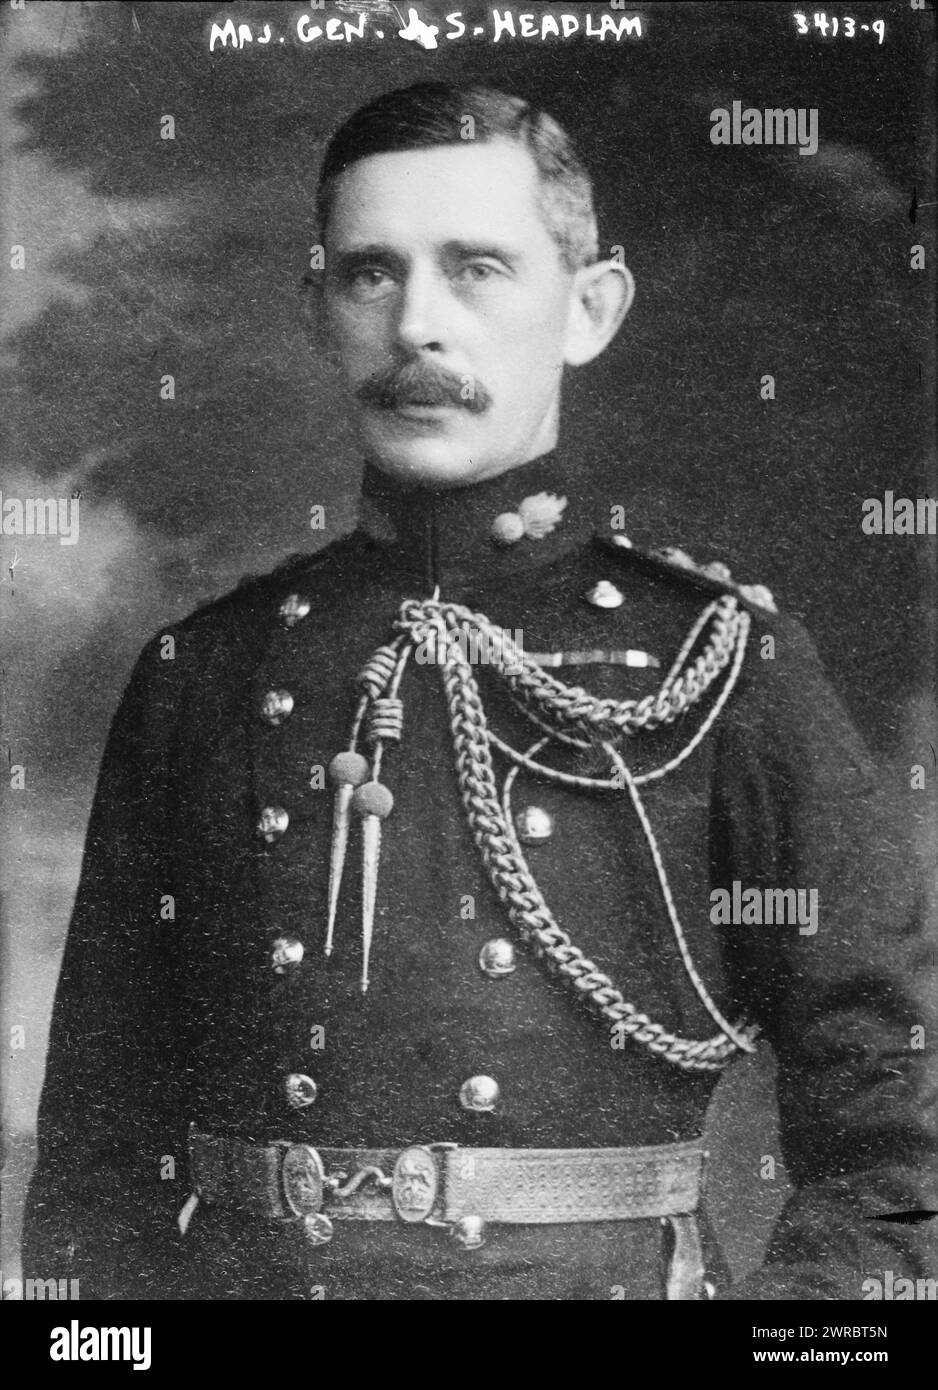 Maj. Gen. J.S. Headlam, Photograph shows Major-General Sir John Emerson Wharton Headlam (1864-1946), who was an artillery expert in the British Army., between ca. 1910 and ca. 1915, Glass negatives, 1 negative: glass Stock Photo